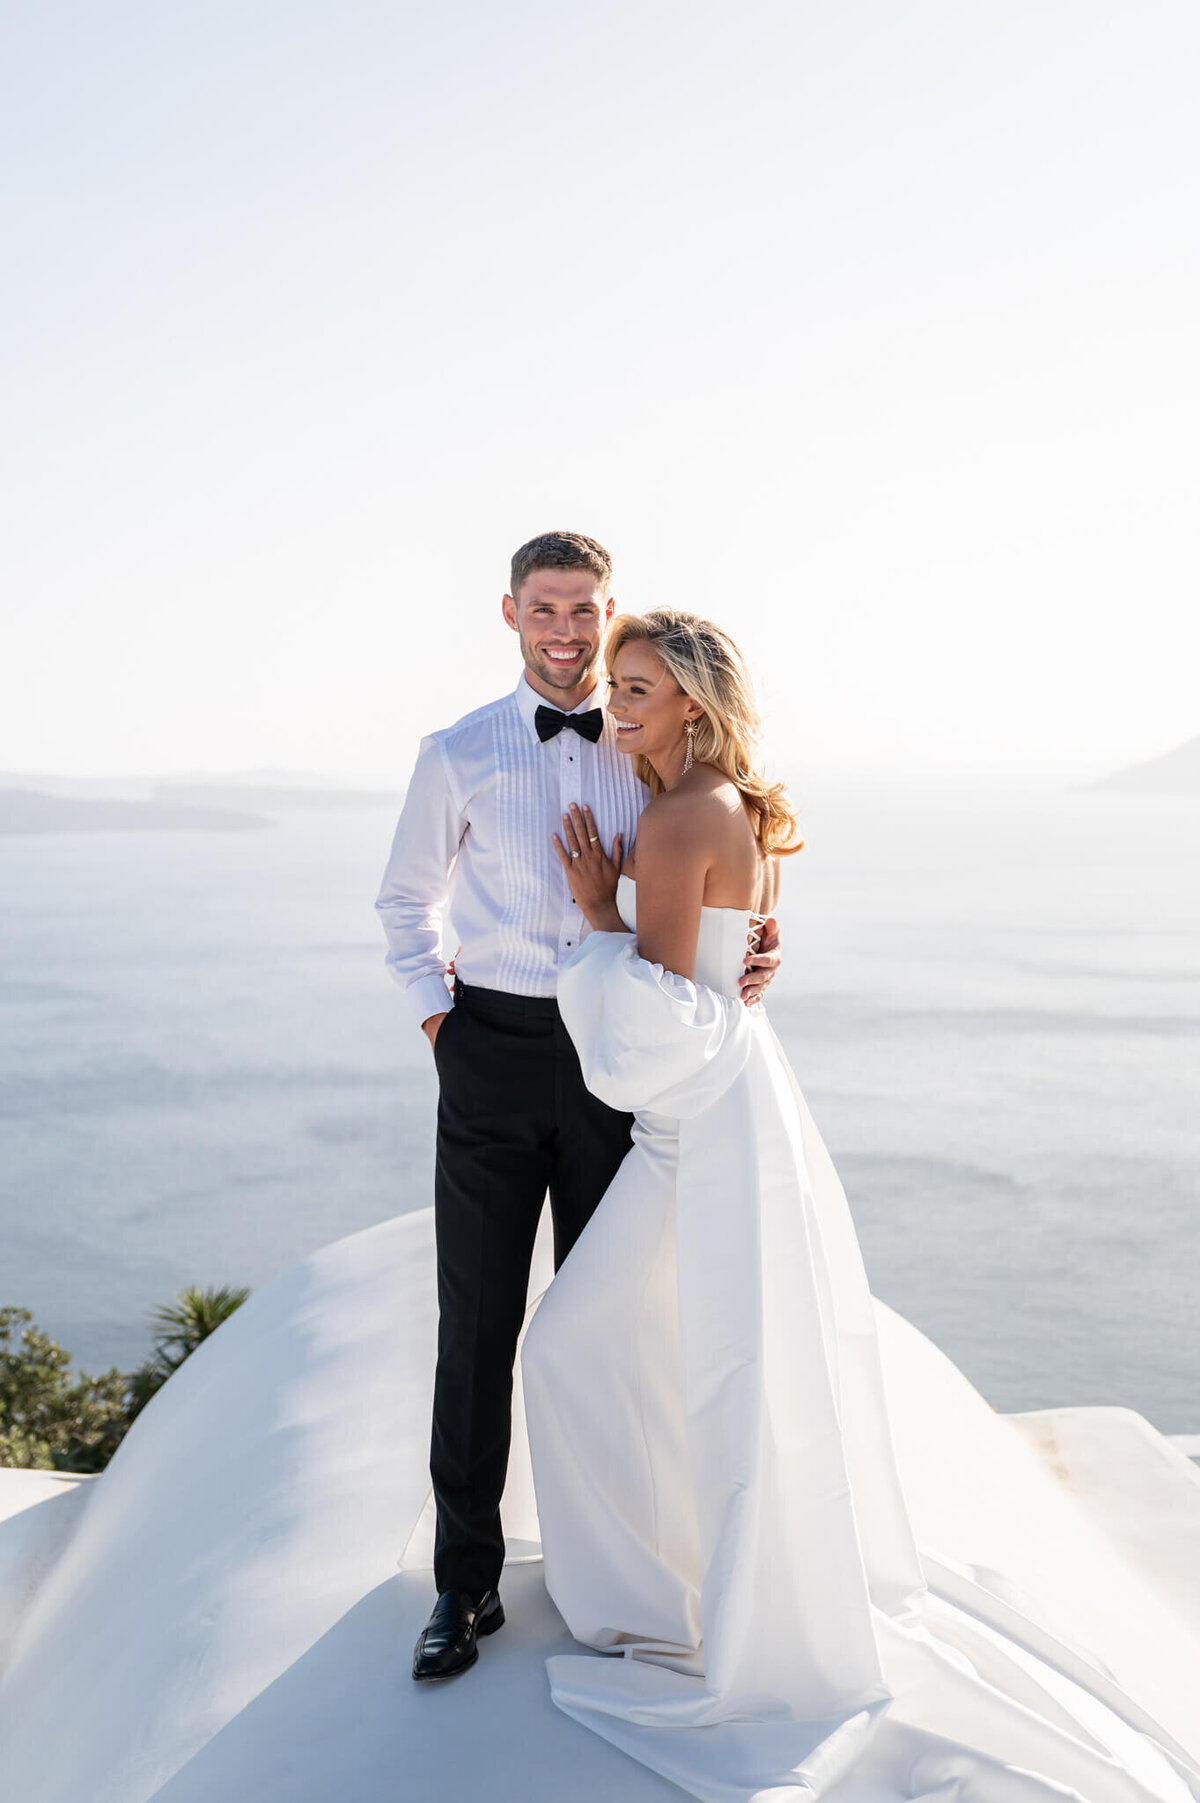 Europe Destination Wedding Photographer - Santorini Greece Wedding Photographer - Chloe Bolam -626